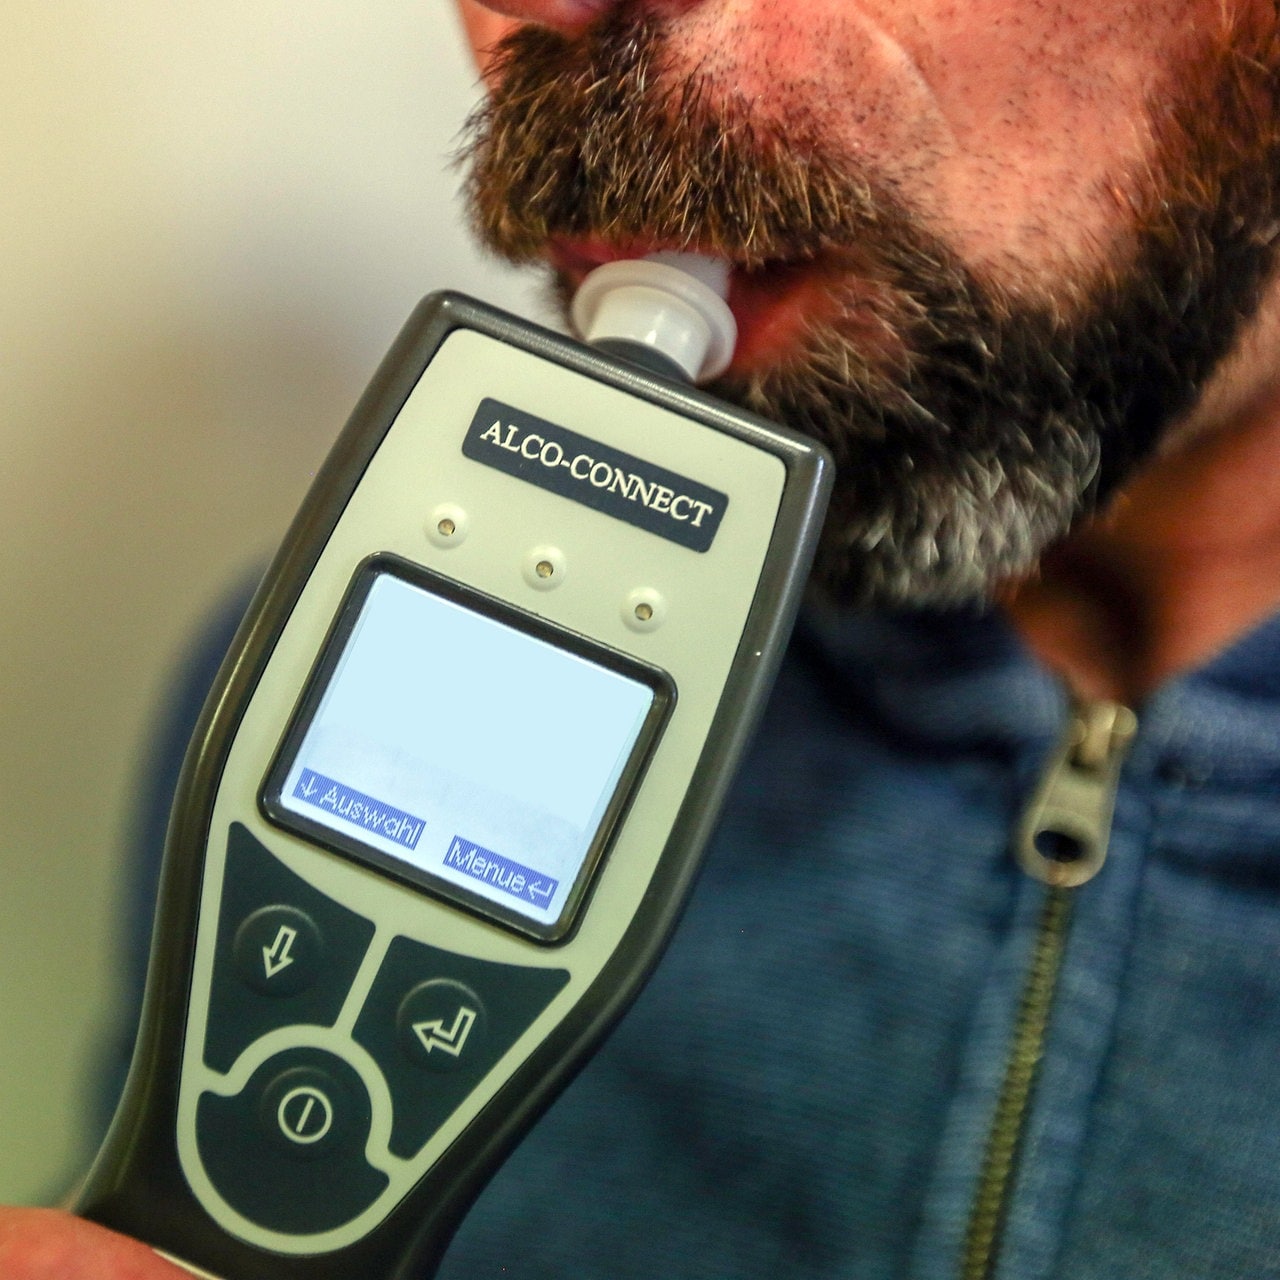 Alkohol-Tester EnviteC AlcoQuant 6020 plus Promille-Test Atem-Messgerät  Polizei